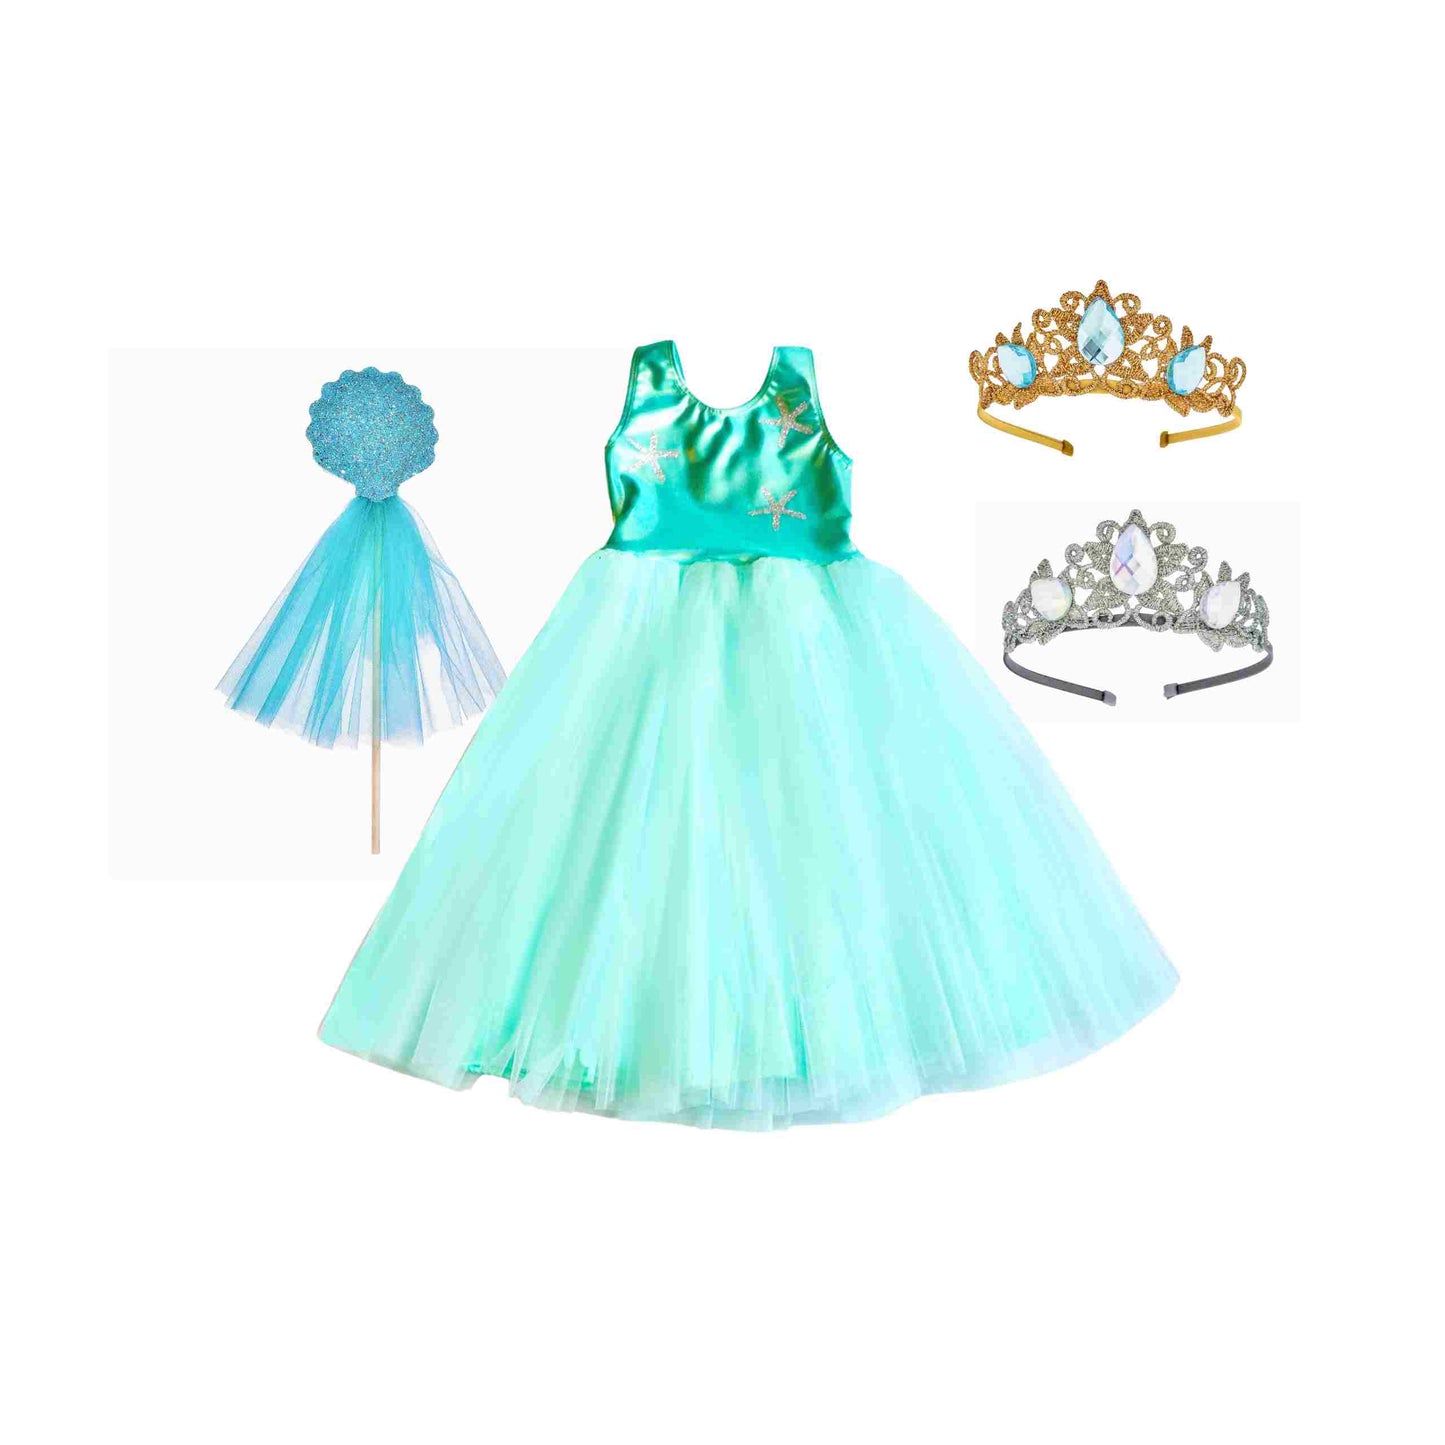 a little girl wearing a princess dress and tiara